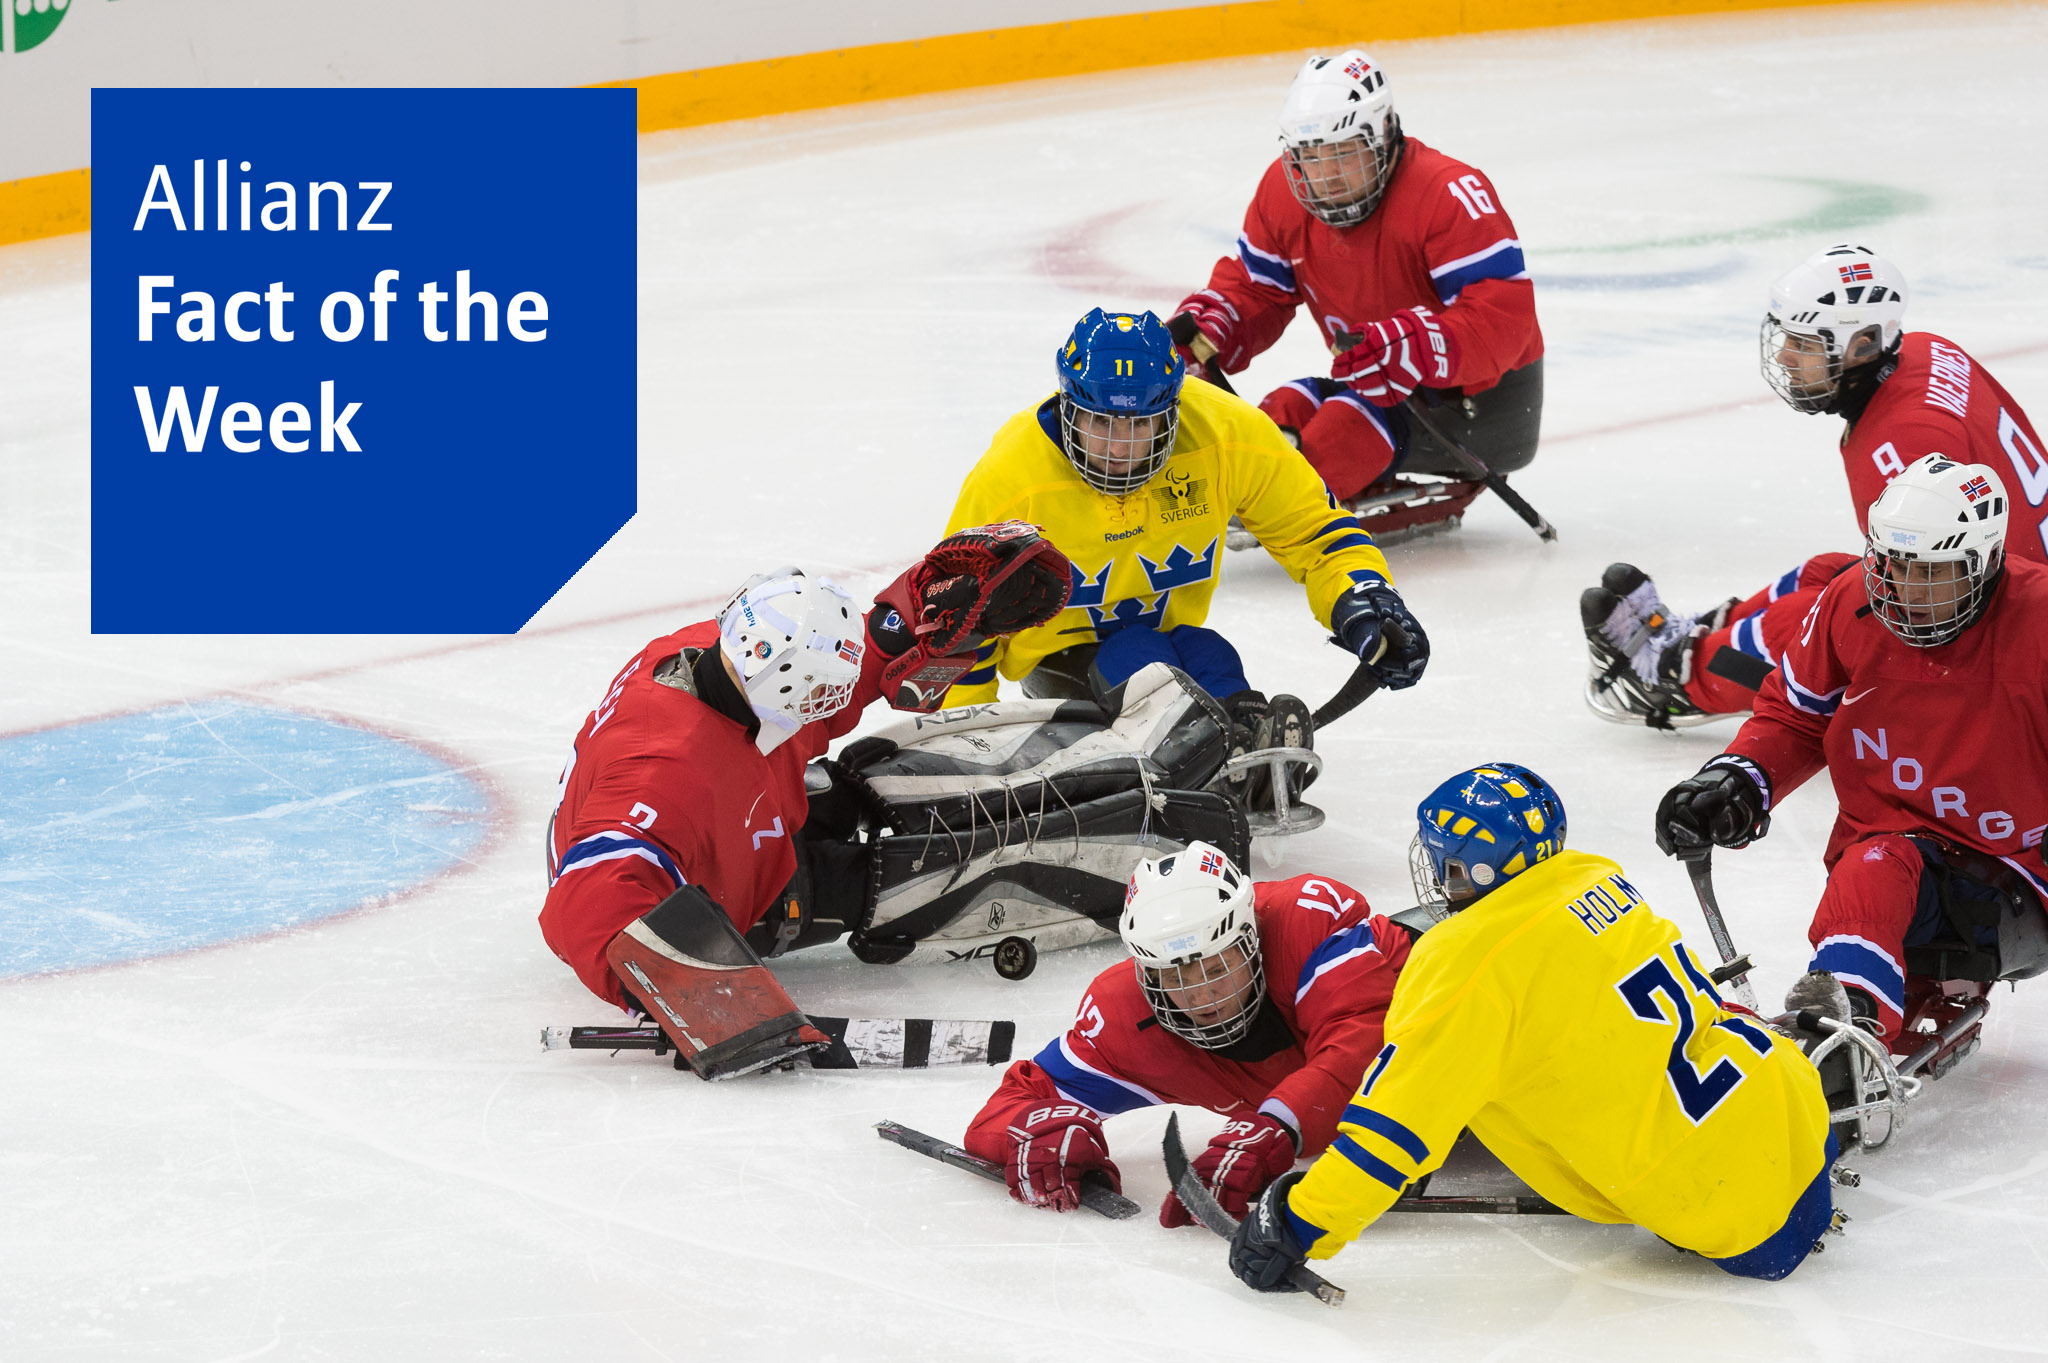 Allianz Fact of the Week Ice sledge hockey